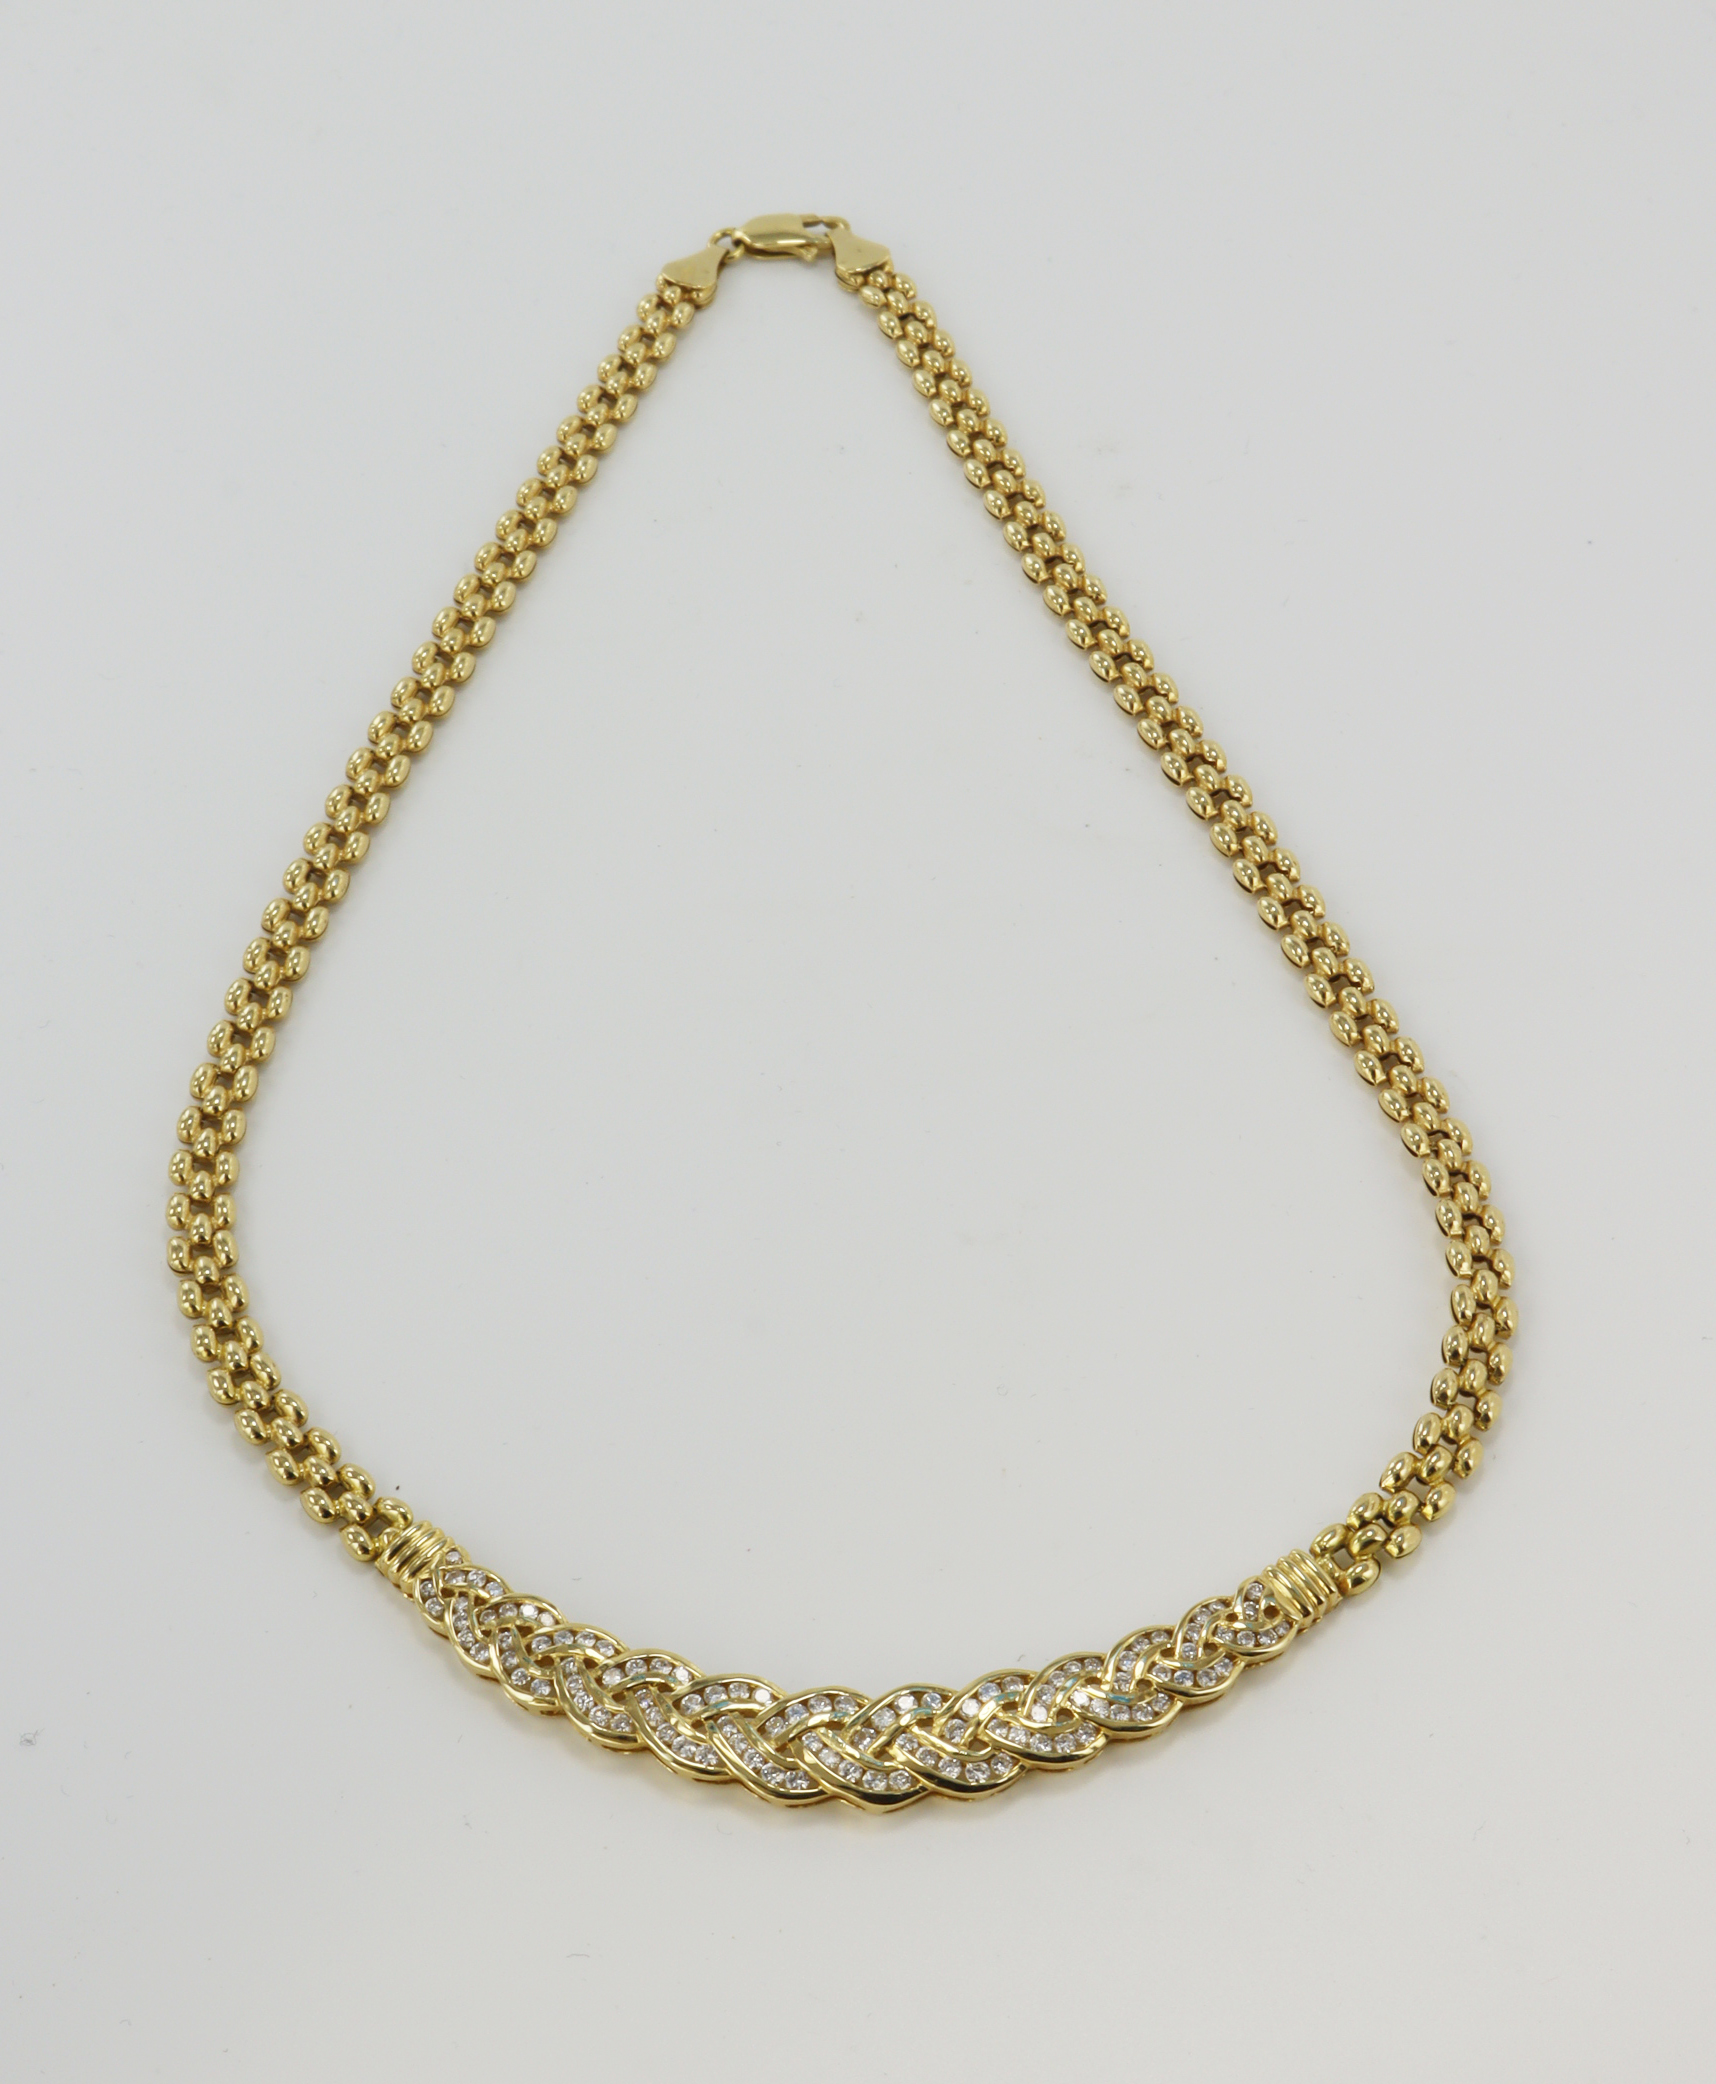 Yellow gold (tests 18ct) diamond set collar necklace, plait style pendant channel set with diamonds,